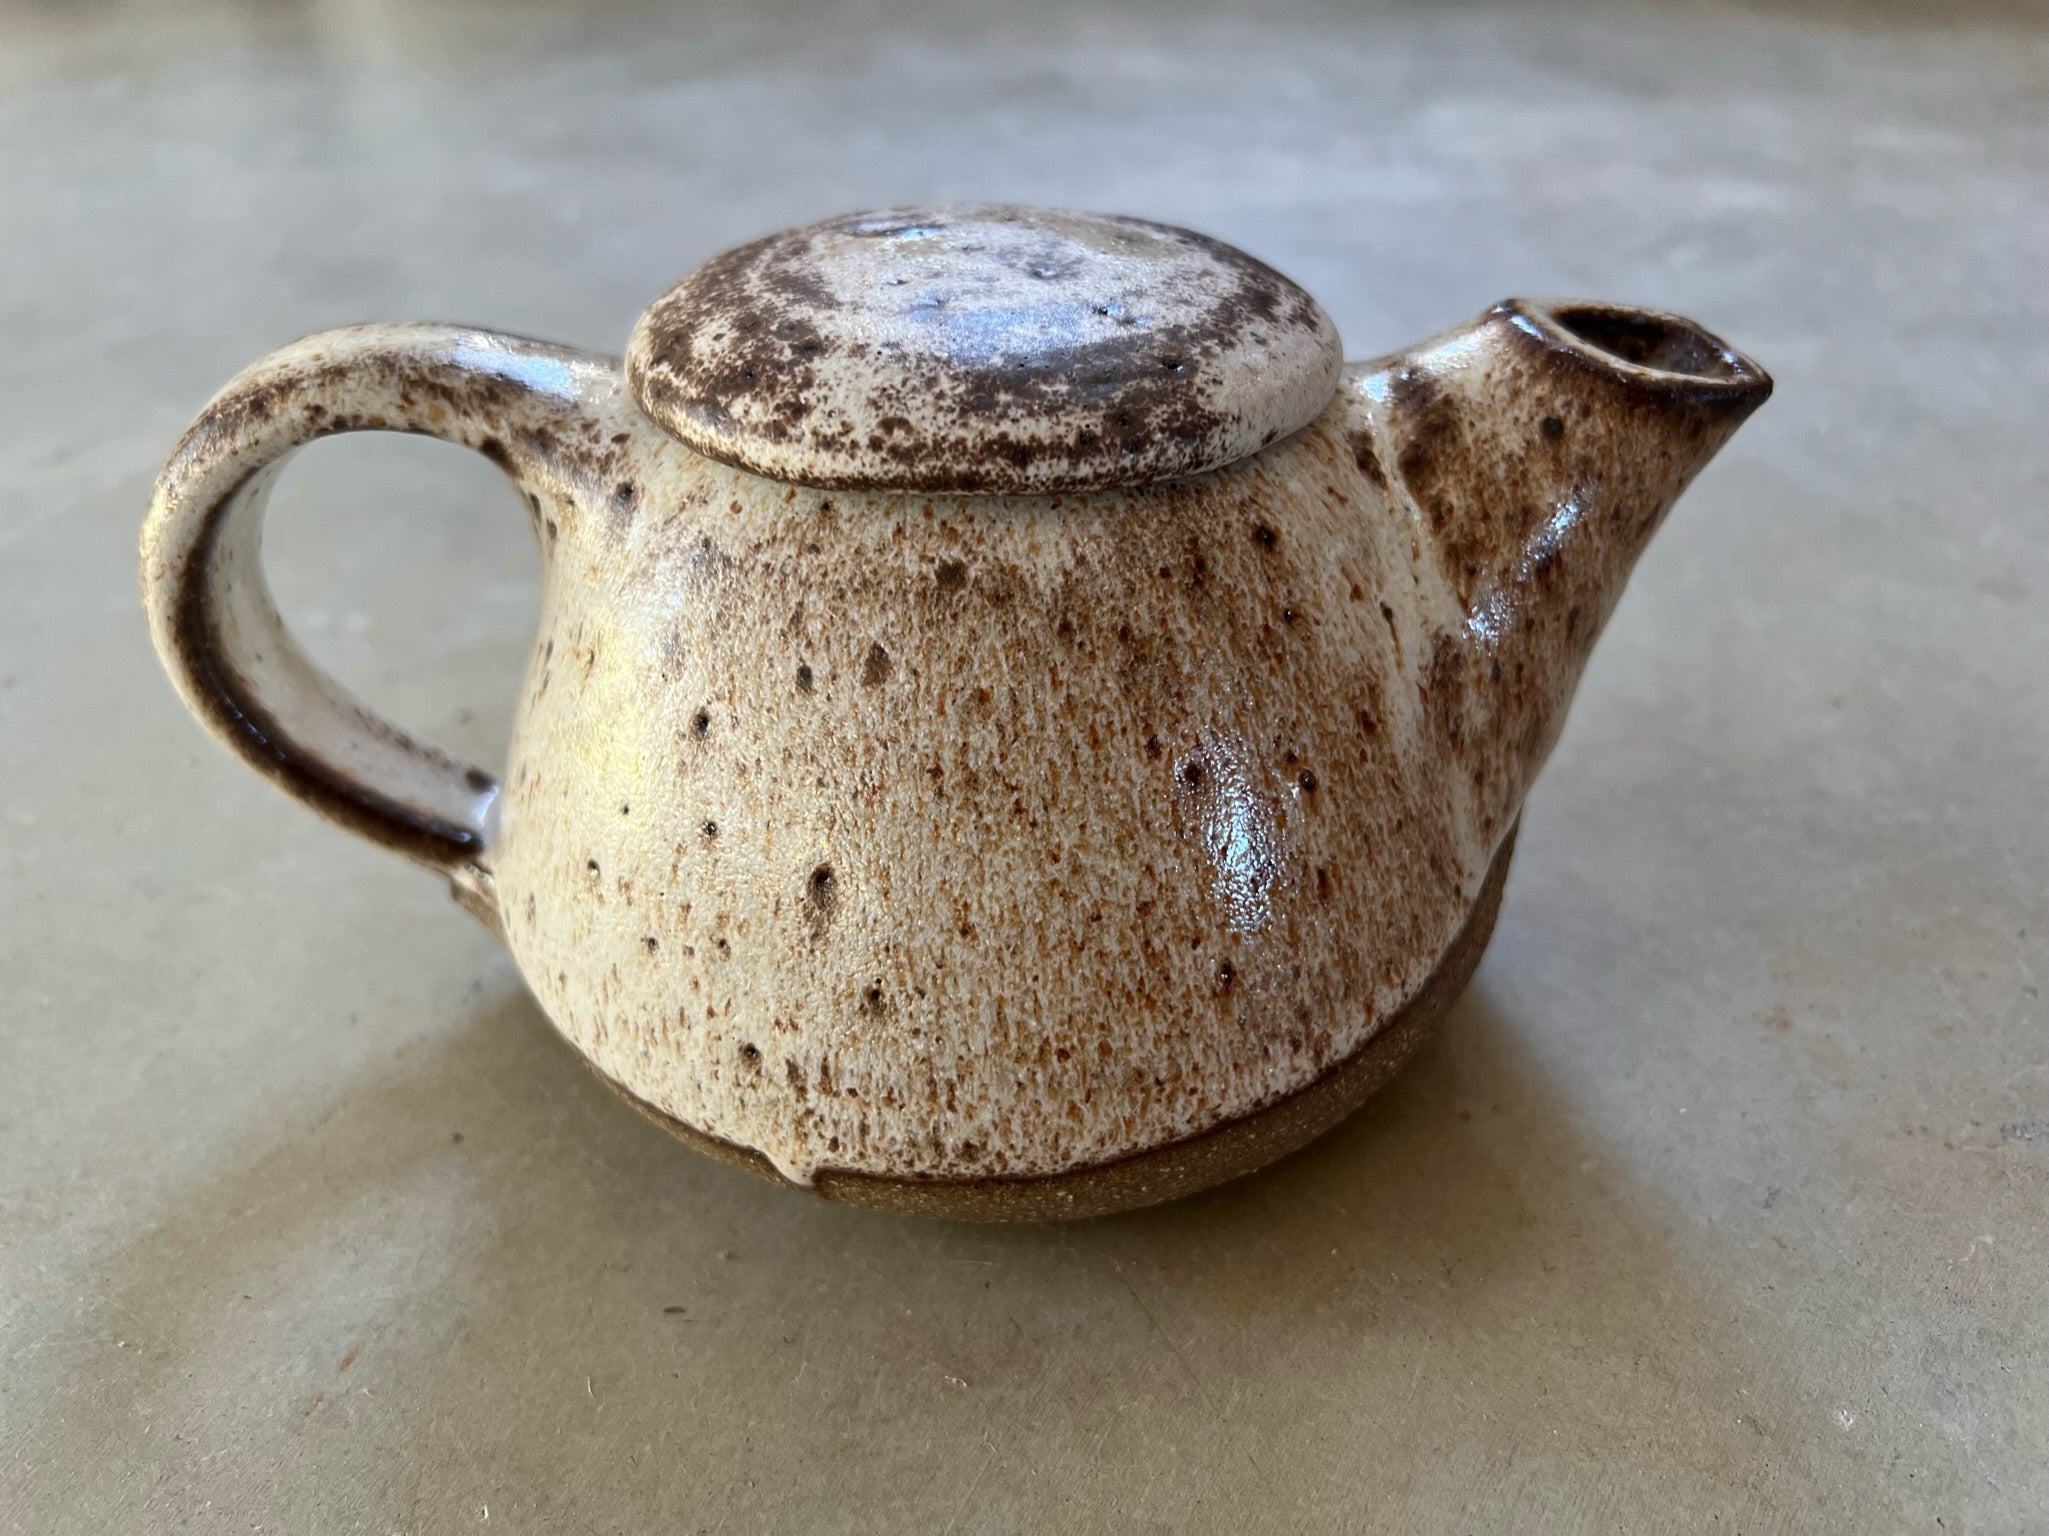 The Rusty Tea Pot